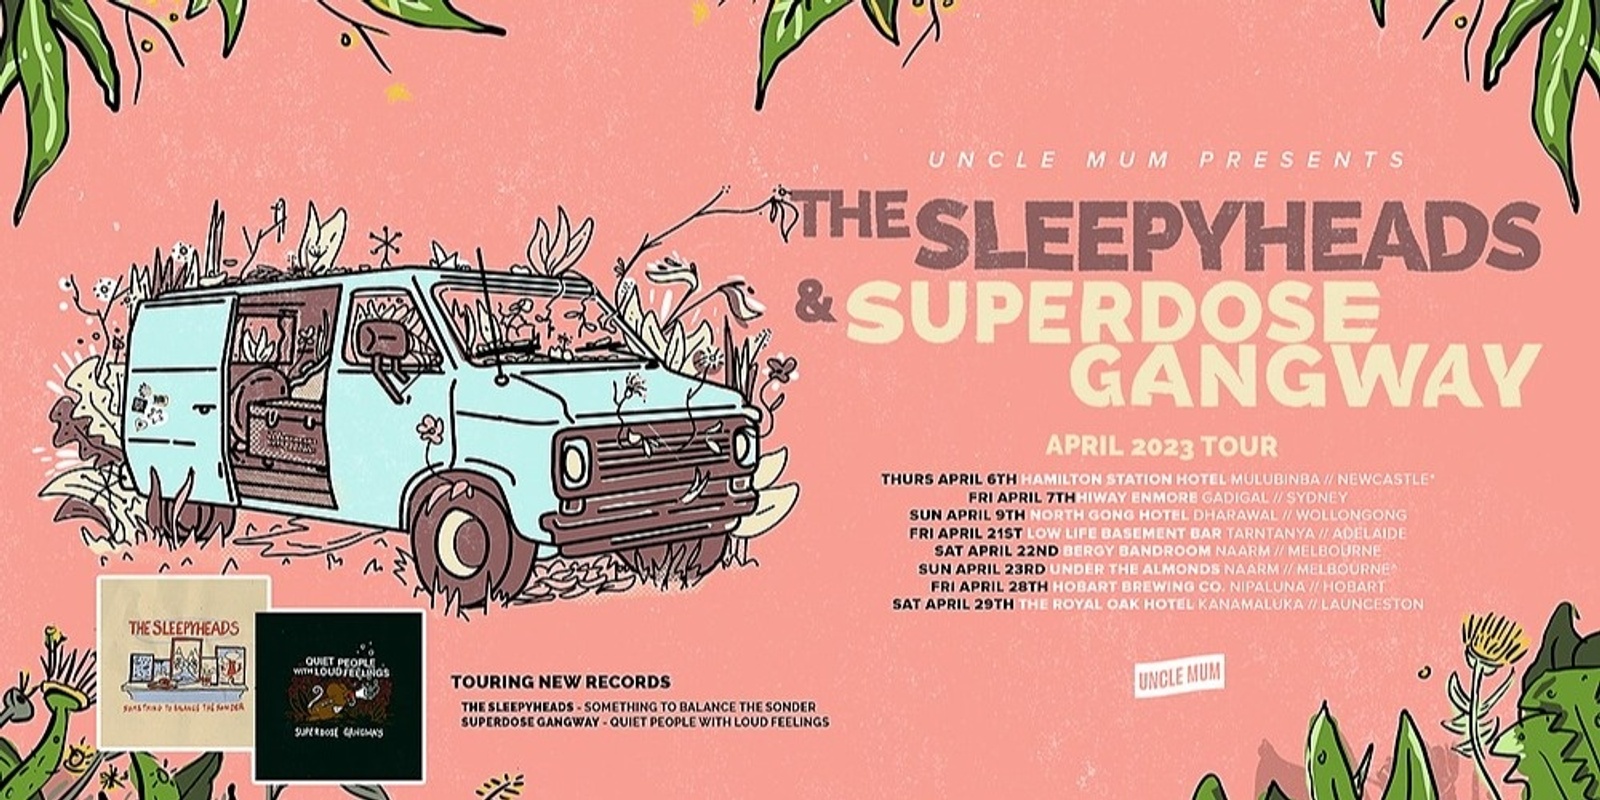 The Sleepyheads & Superdose Gangway April 2023 Tour [SYD]